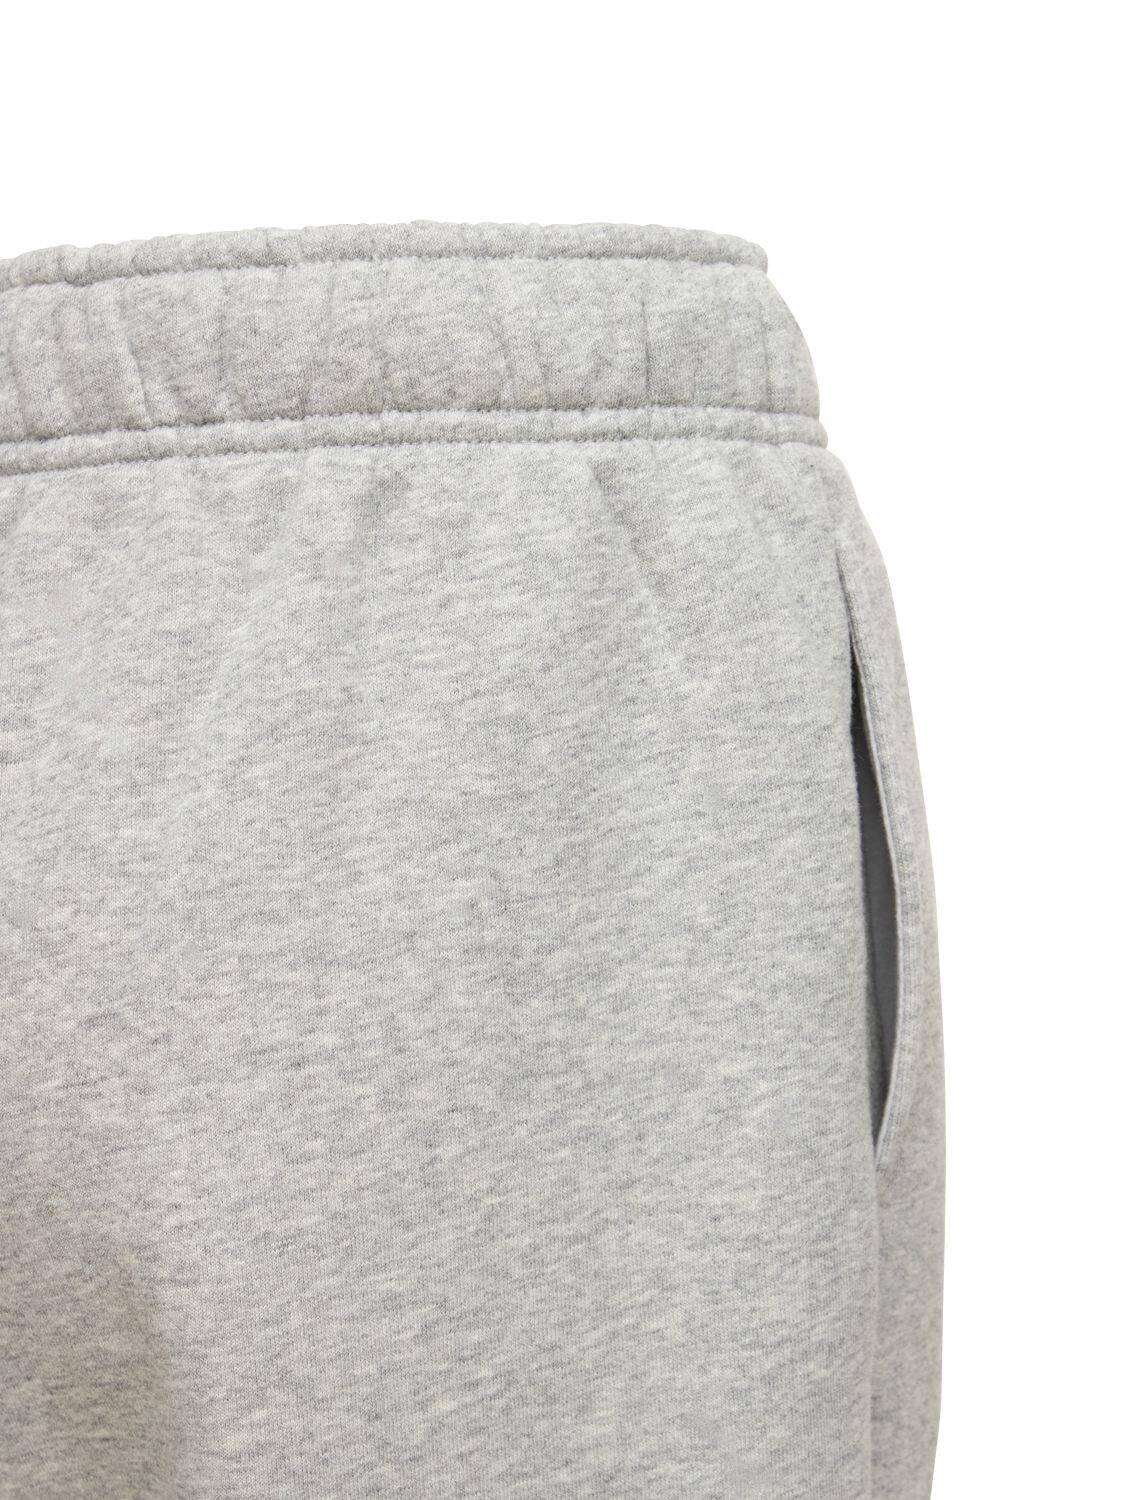 Alo Yoga Accolade High Waist Sweatpants in Grey (Gray) | Lyst